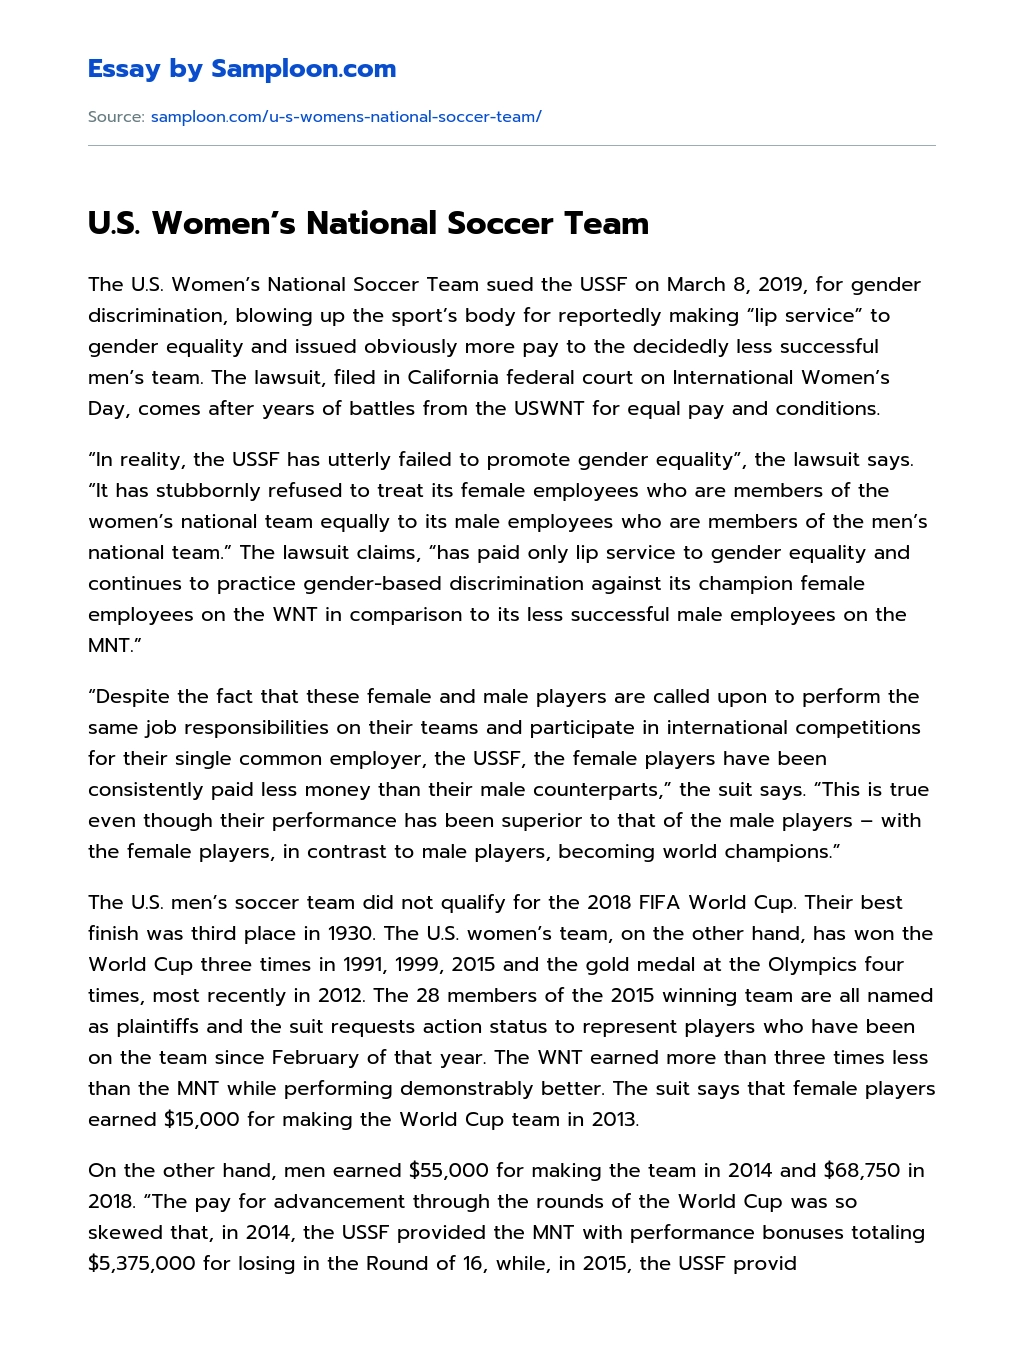 U.S. Women’s National Soccer Team essay